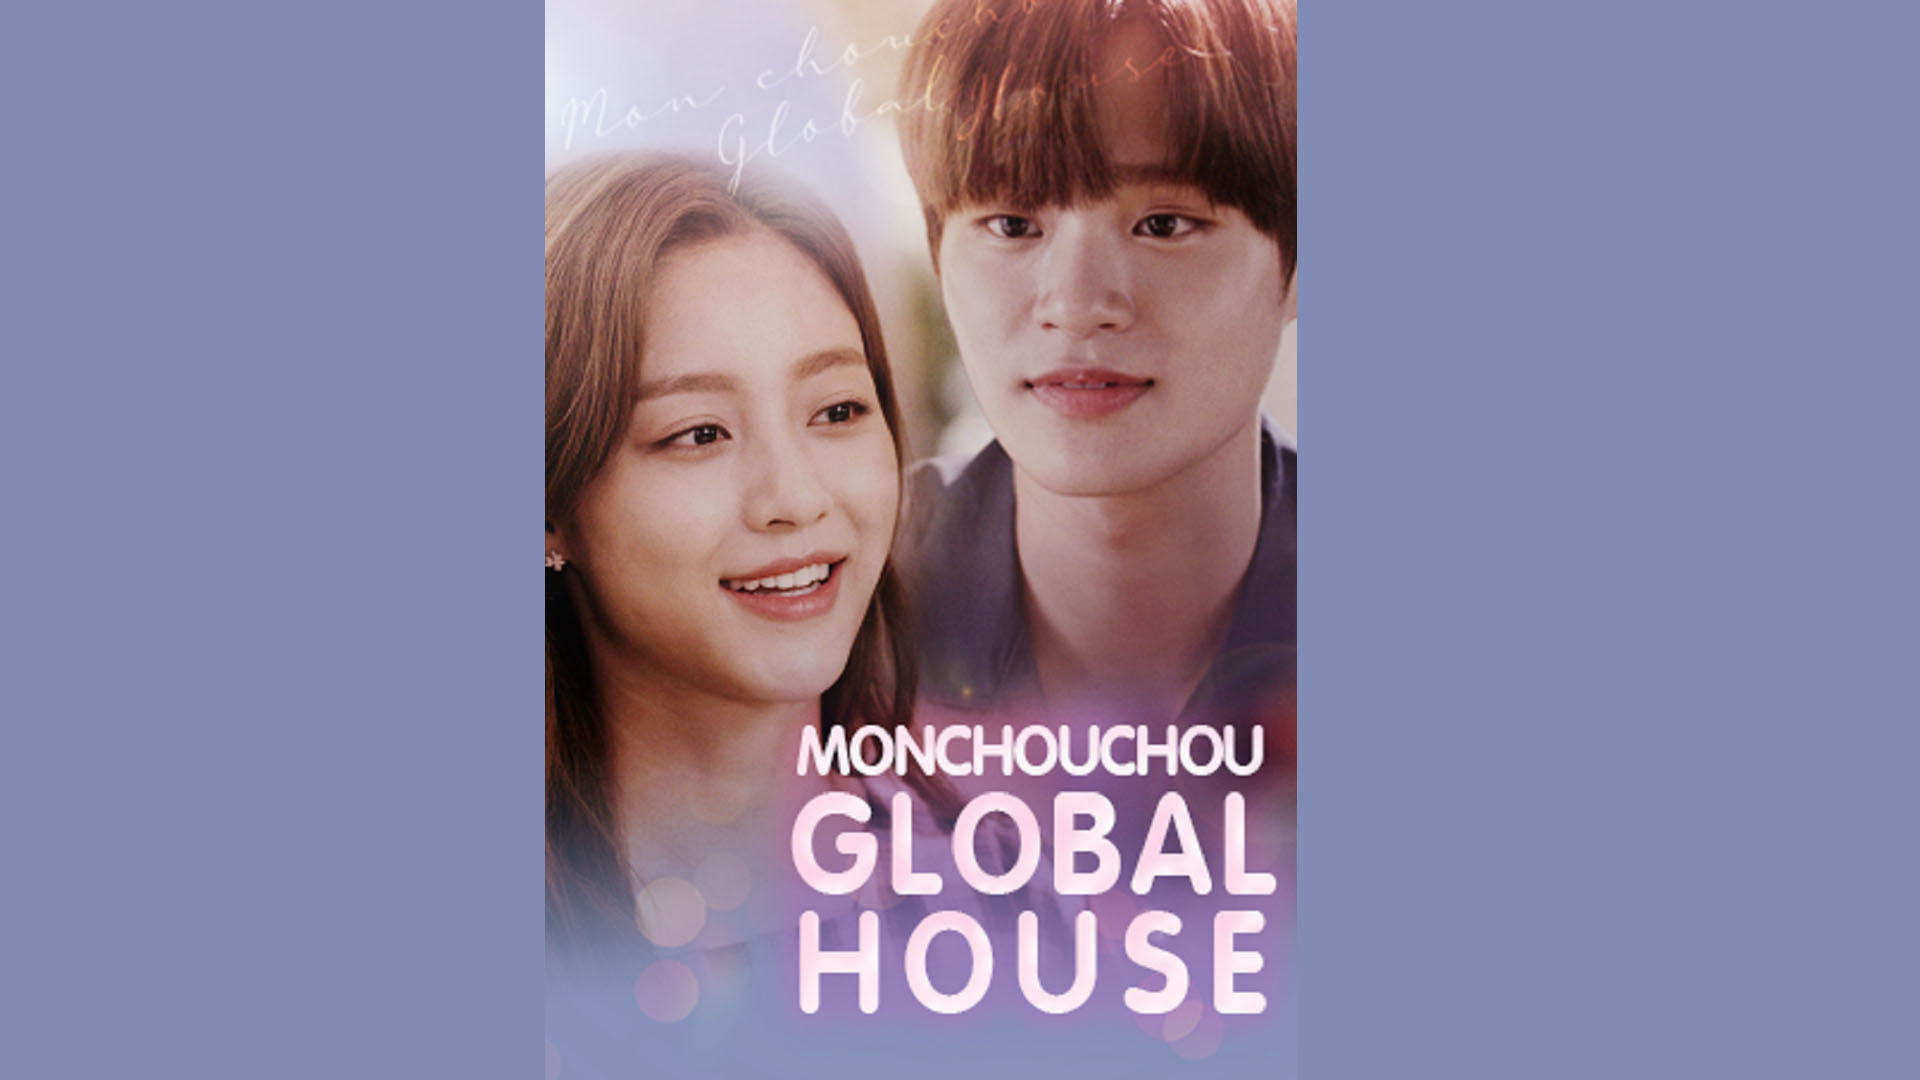 Monchouchou global house